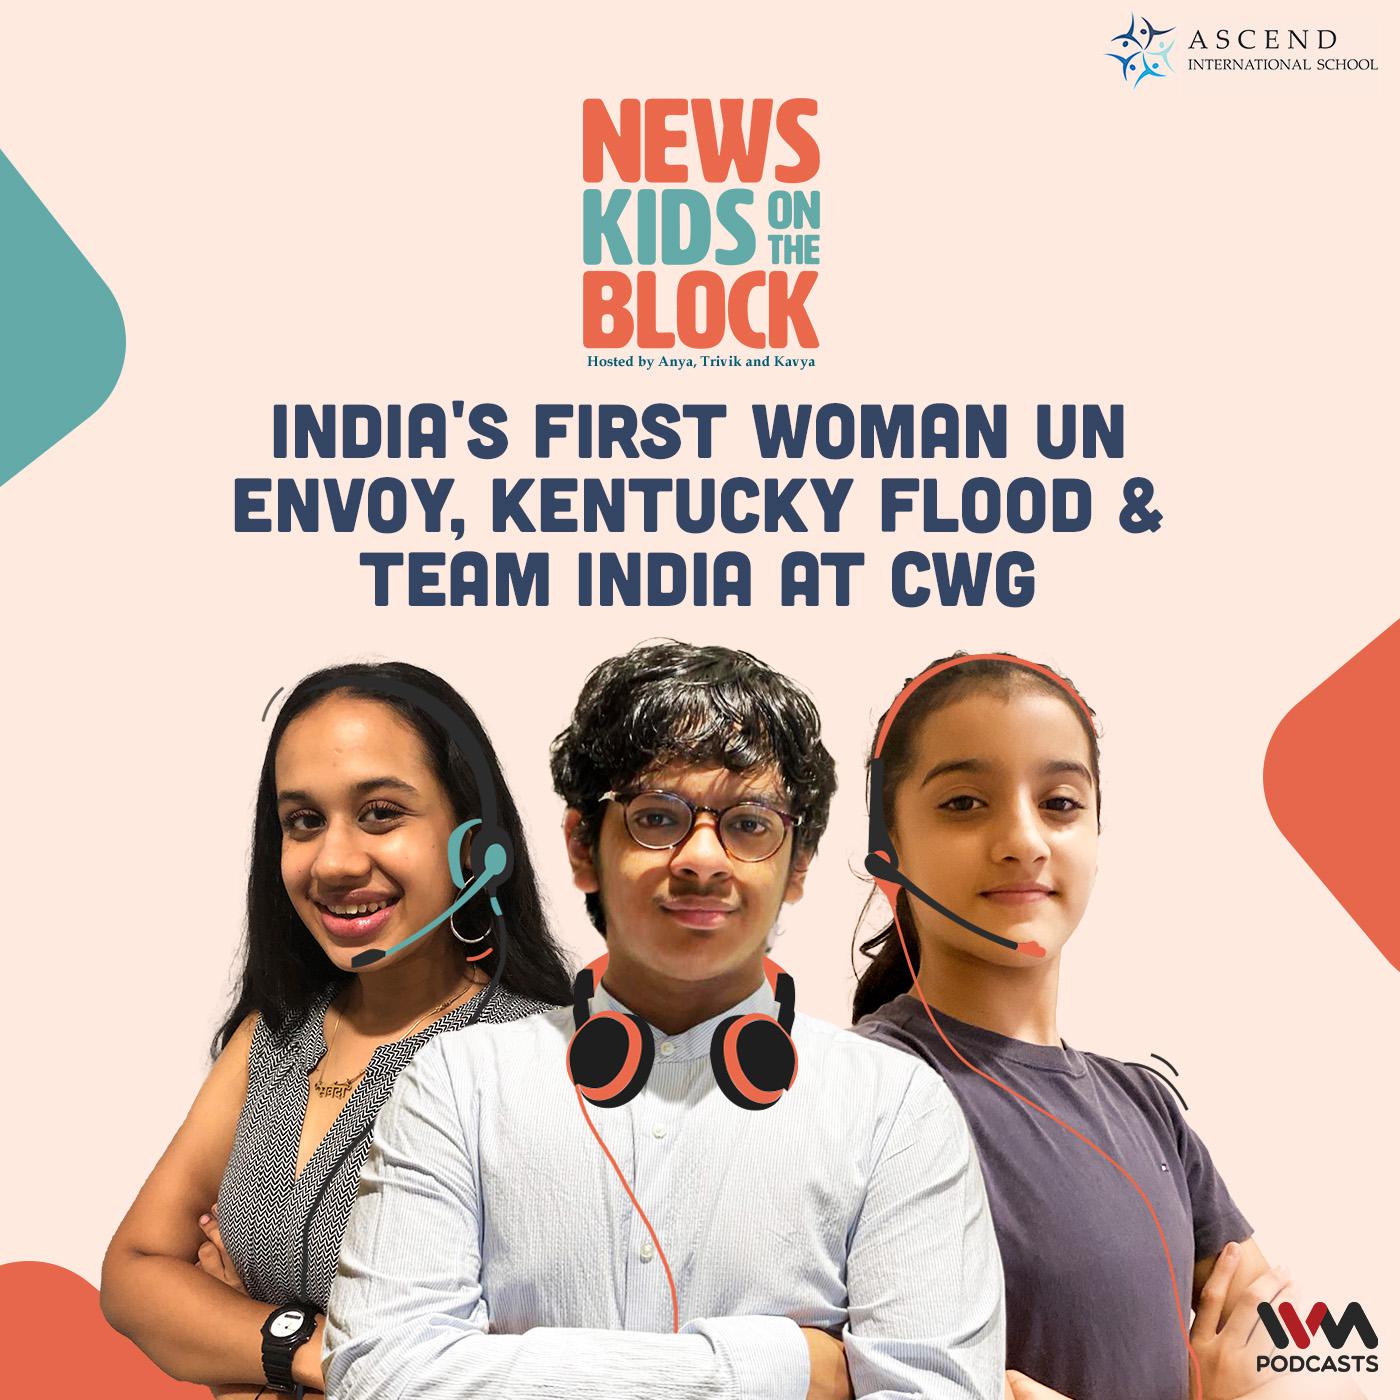 India's first woman UN envoy, Kentucky flood & team India at CWG